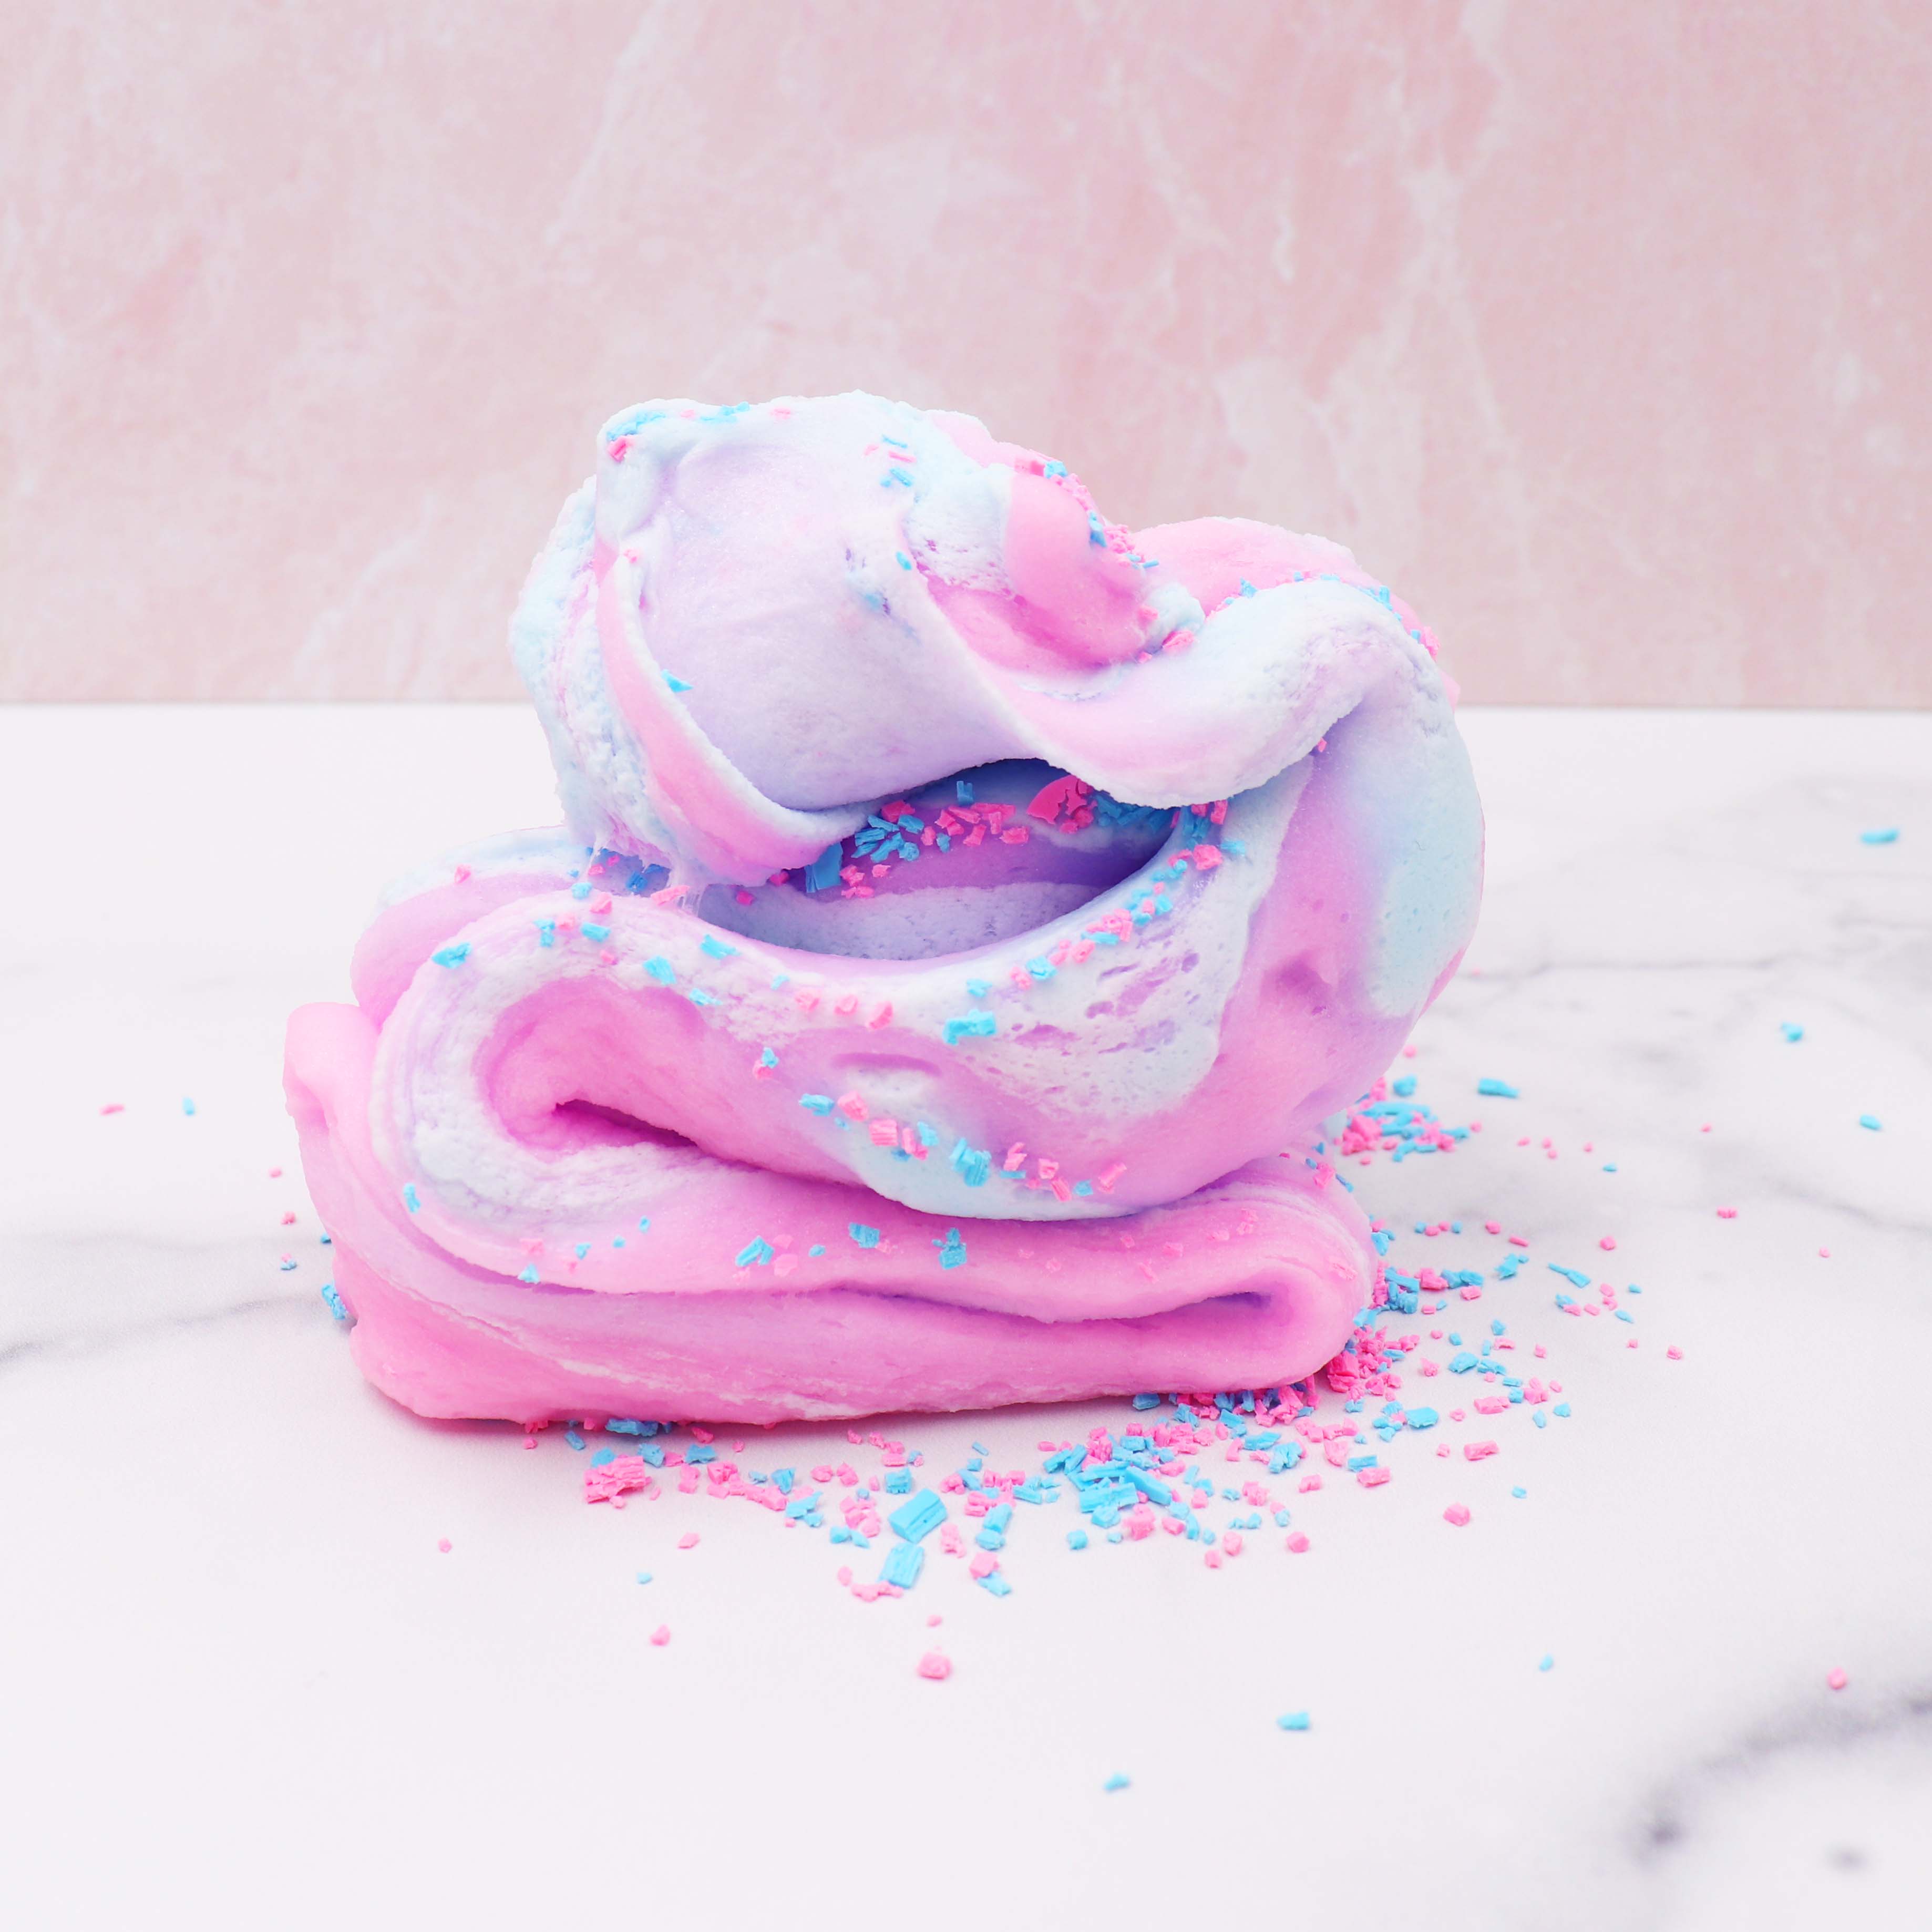 Unicorn Ice Cream  Pink & Blue Cloud Creme Slime – Slime Fantasies